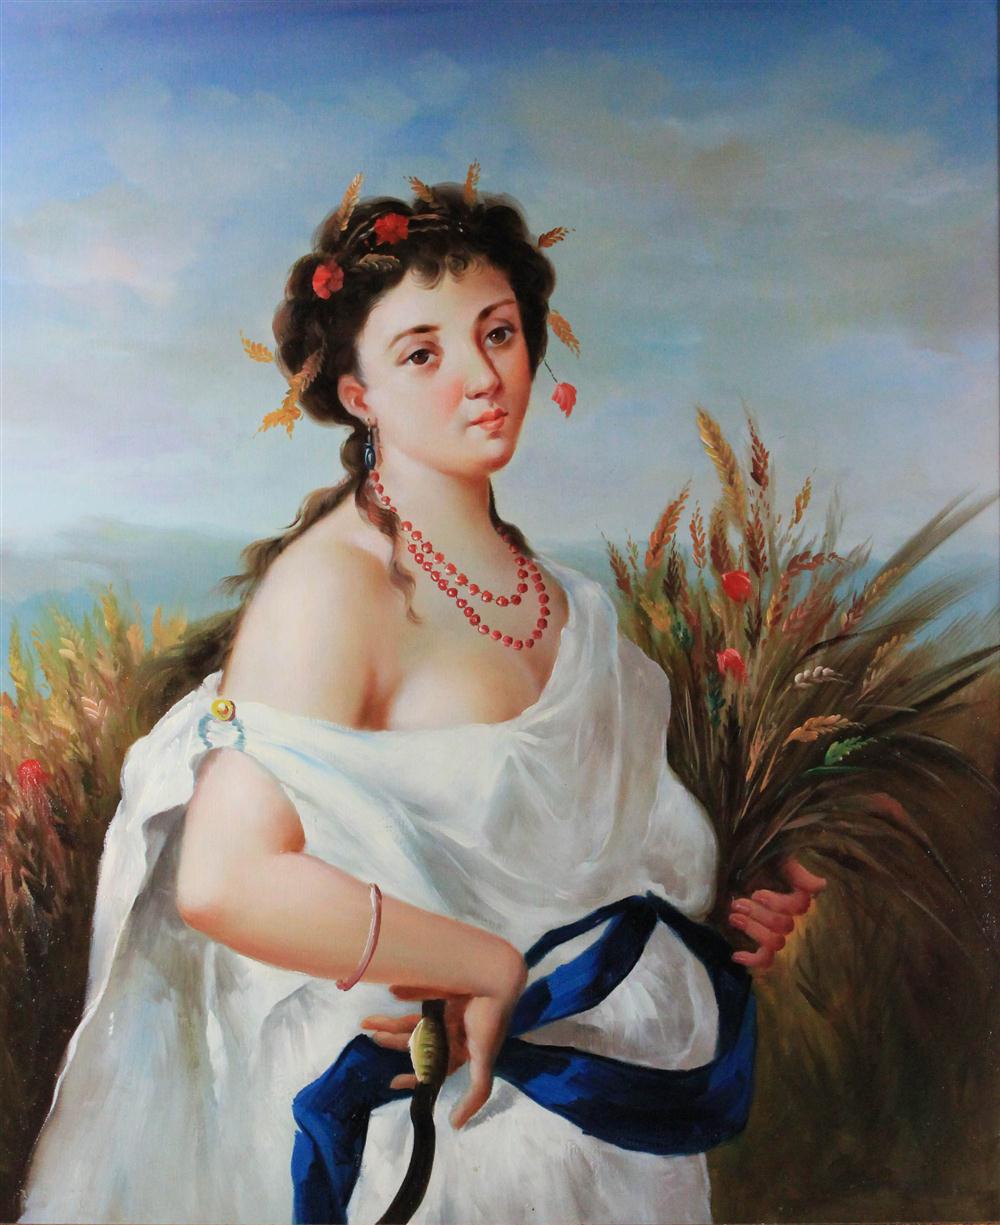 J BROWN PORTRAIT OF A GREEK WOMAN 145c63